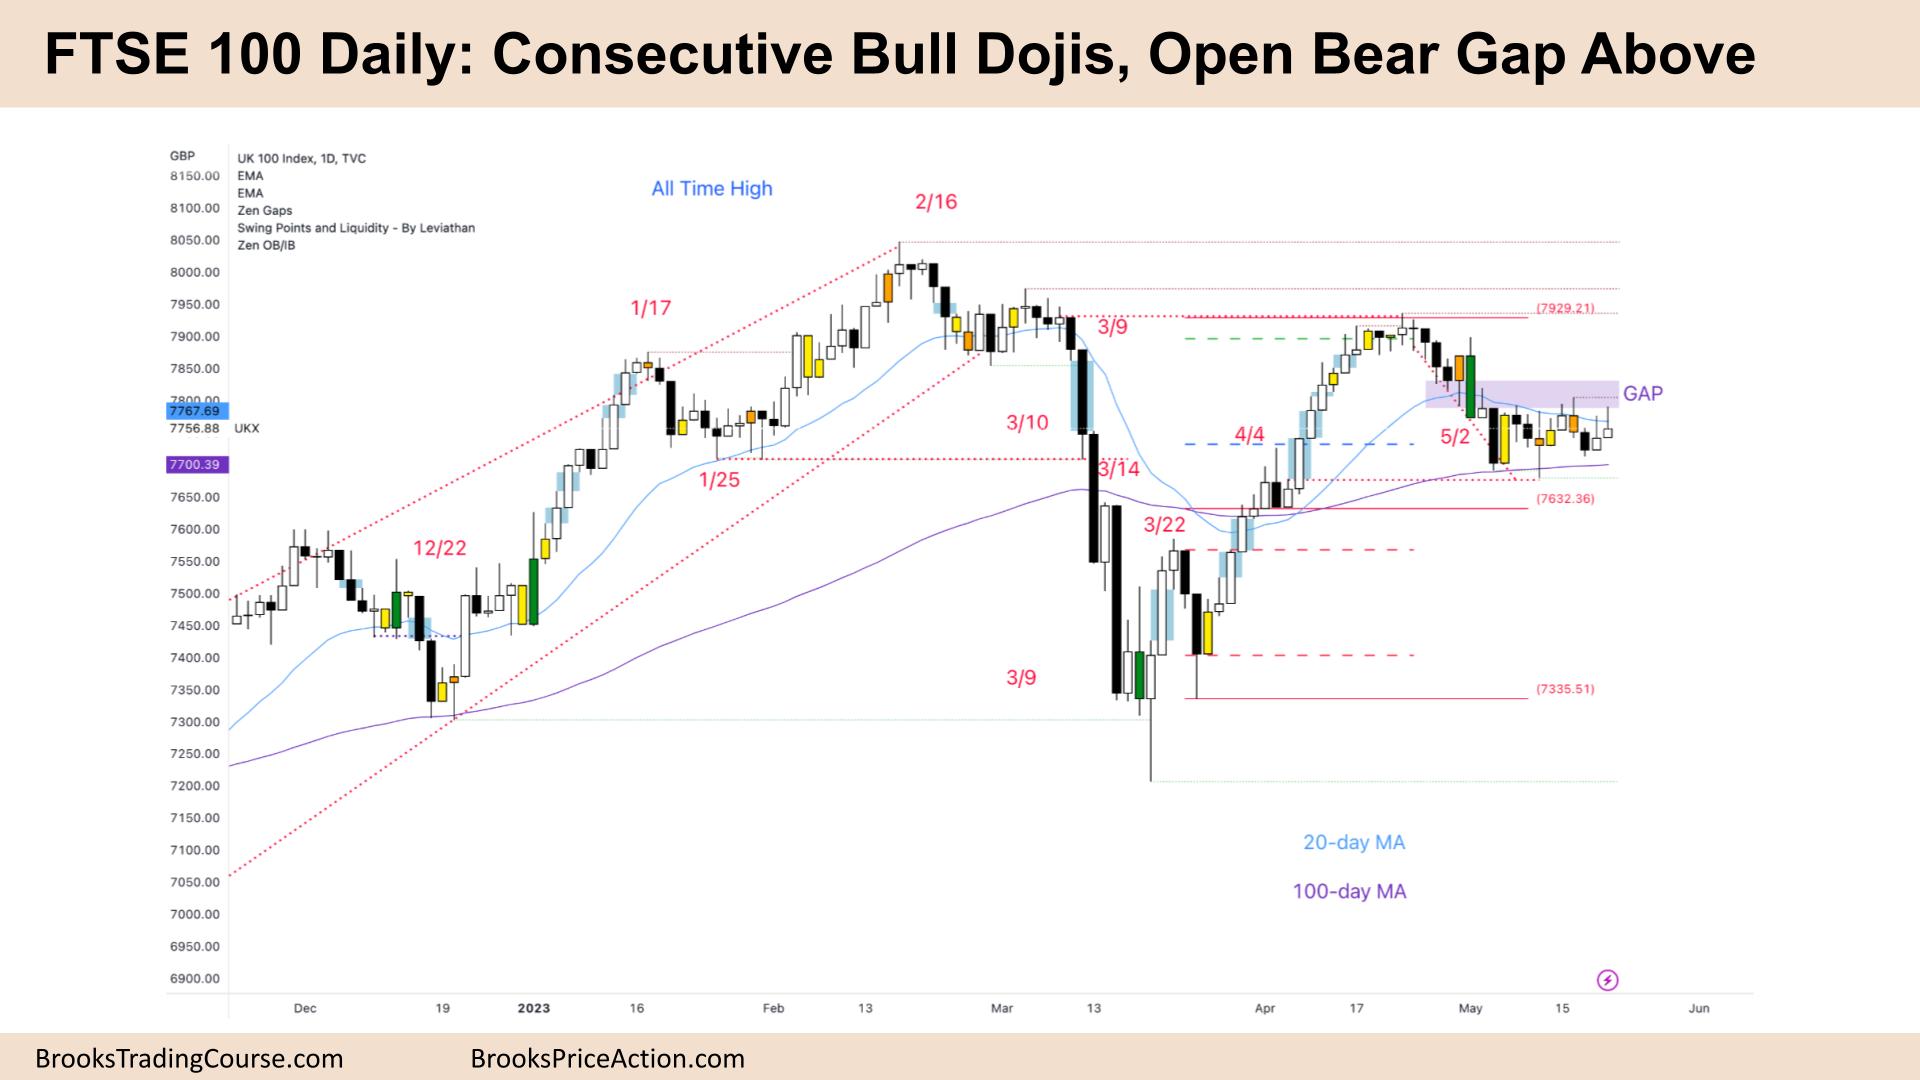 FTSE 100 Consecutive Bull Dojis Open Bear Gap Above